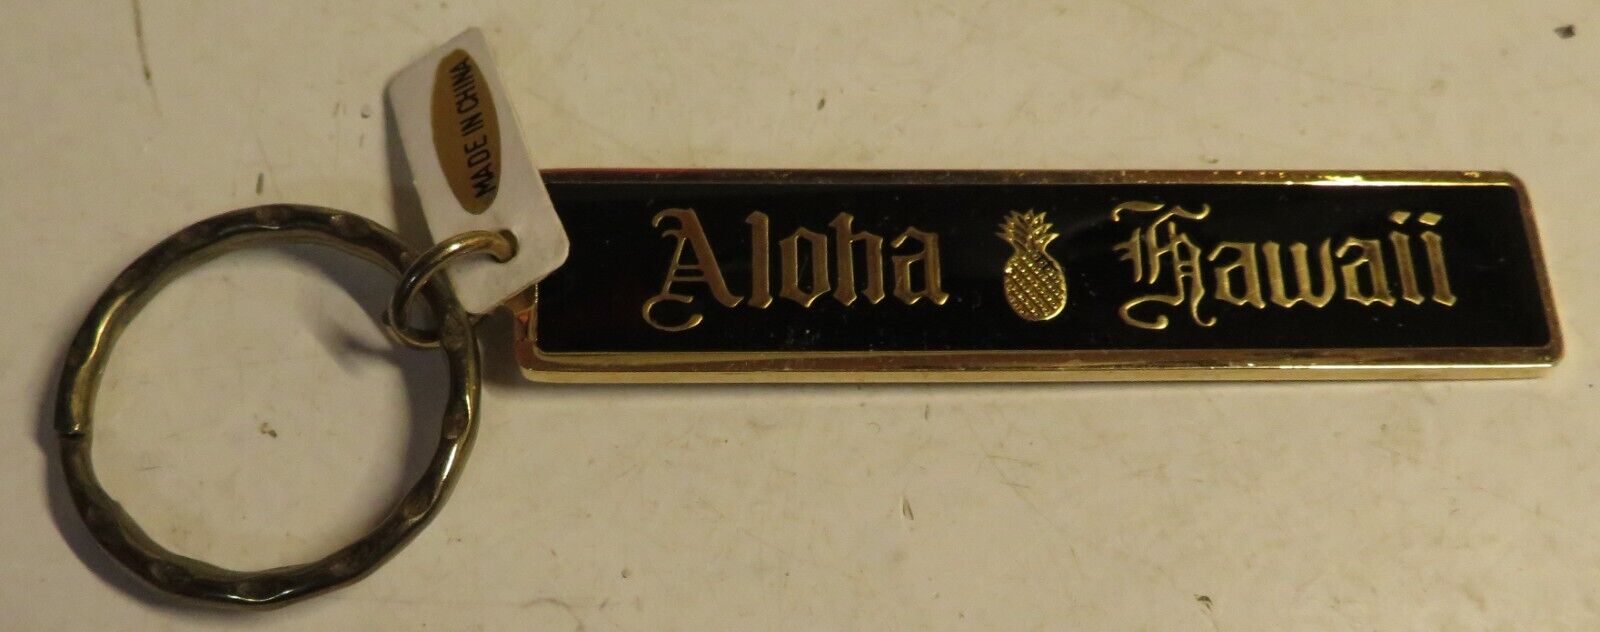 CAROL - KALOLA Aloha Hawaii Souvenir Keyring Black Gold Tone New Old Stock Vinta